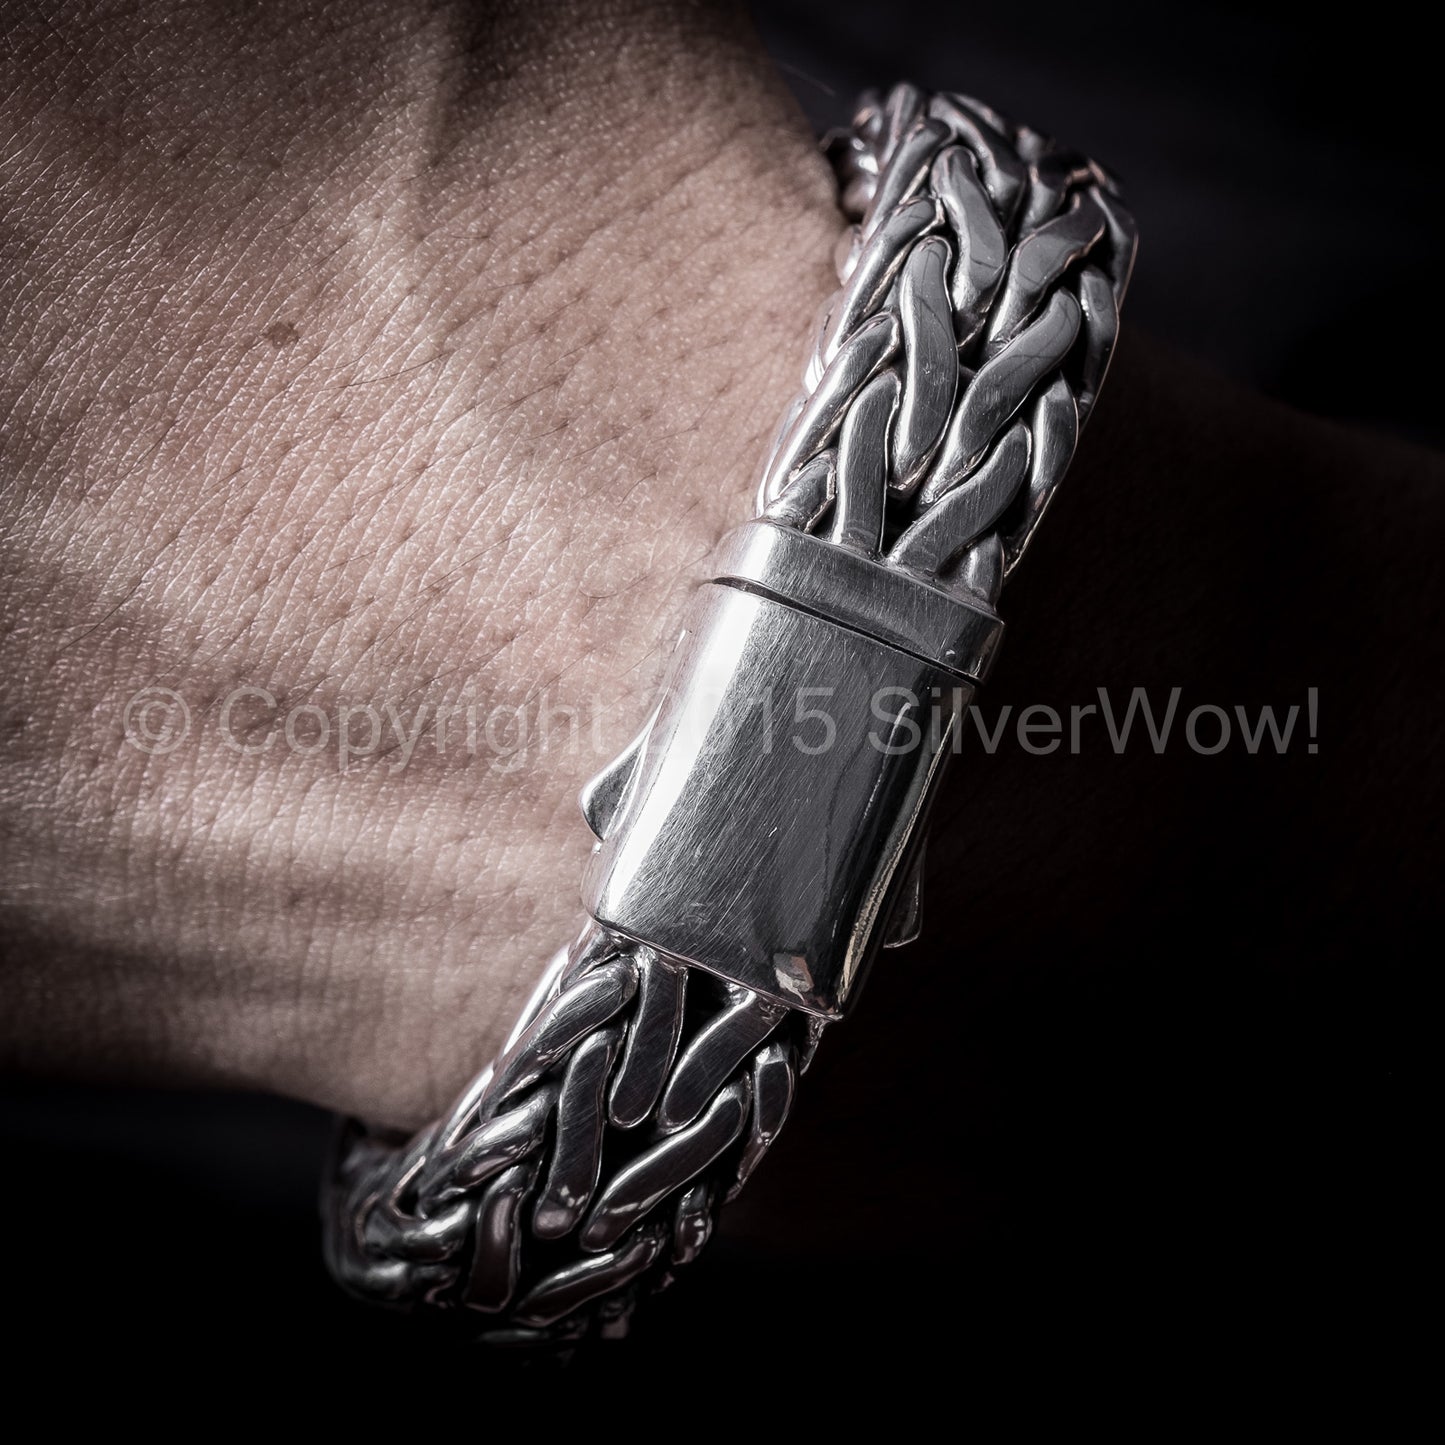 Rope Weave Bracelet 16mm wide